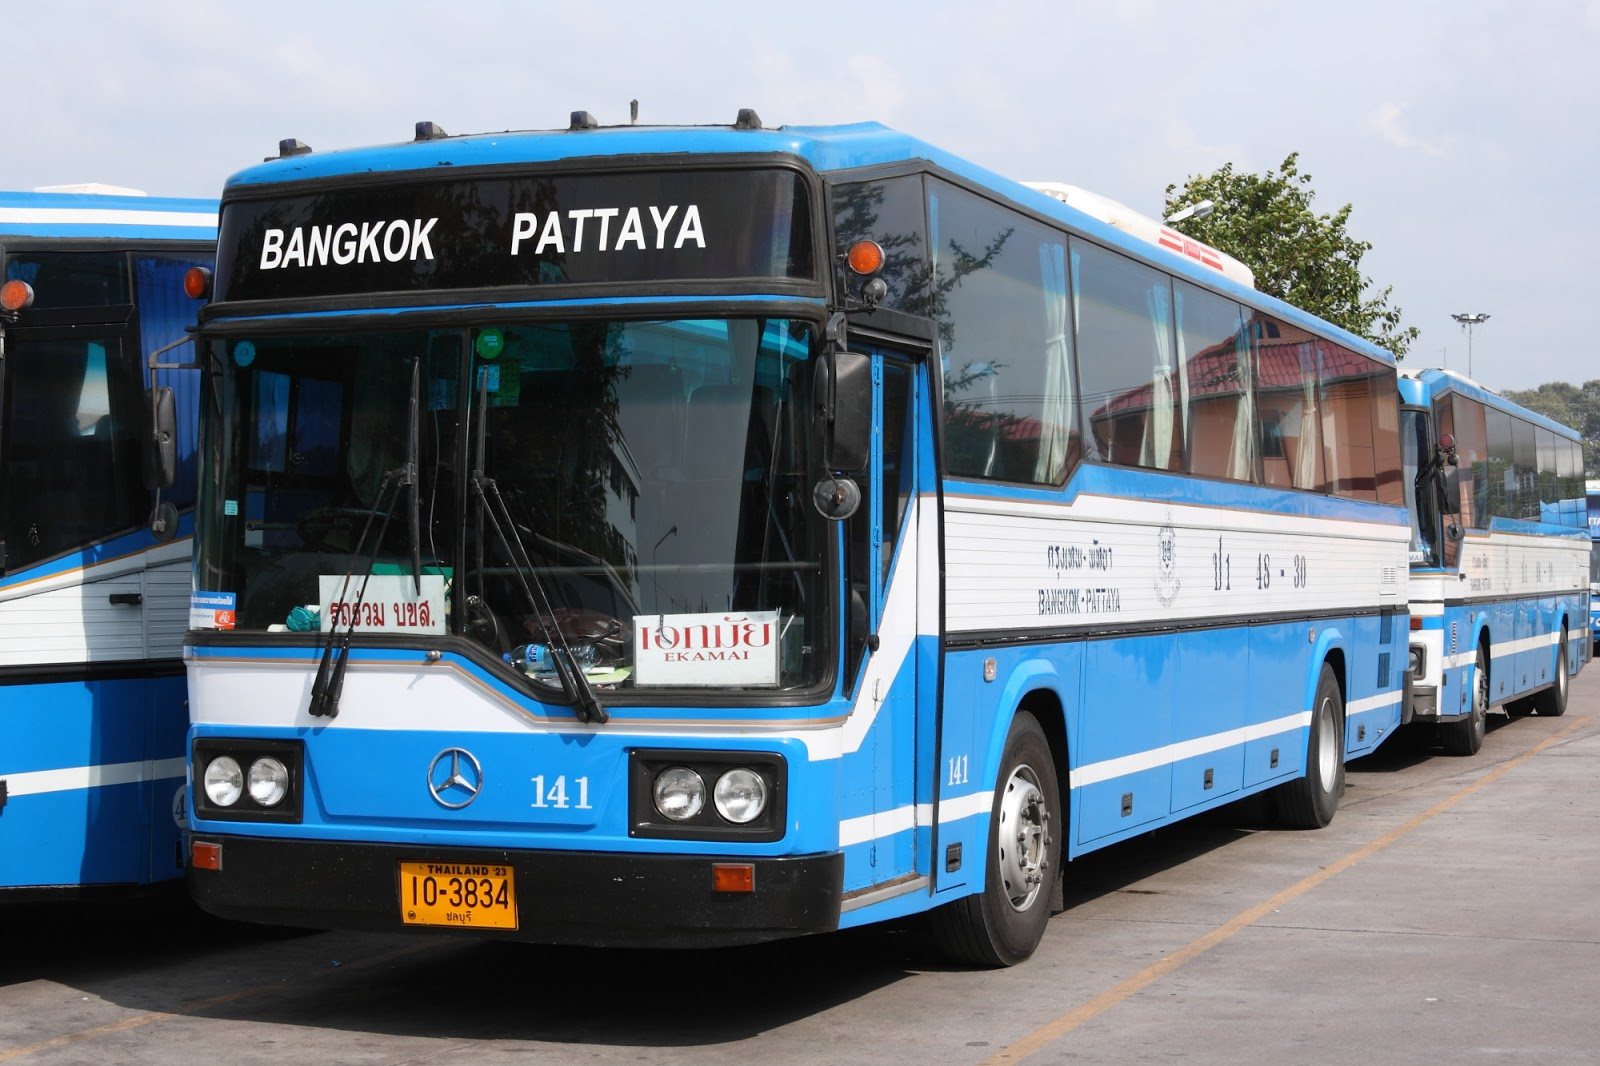 Travelling from Bangkok to Pattaya by bus